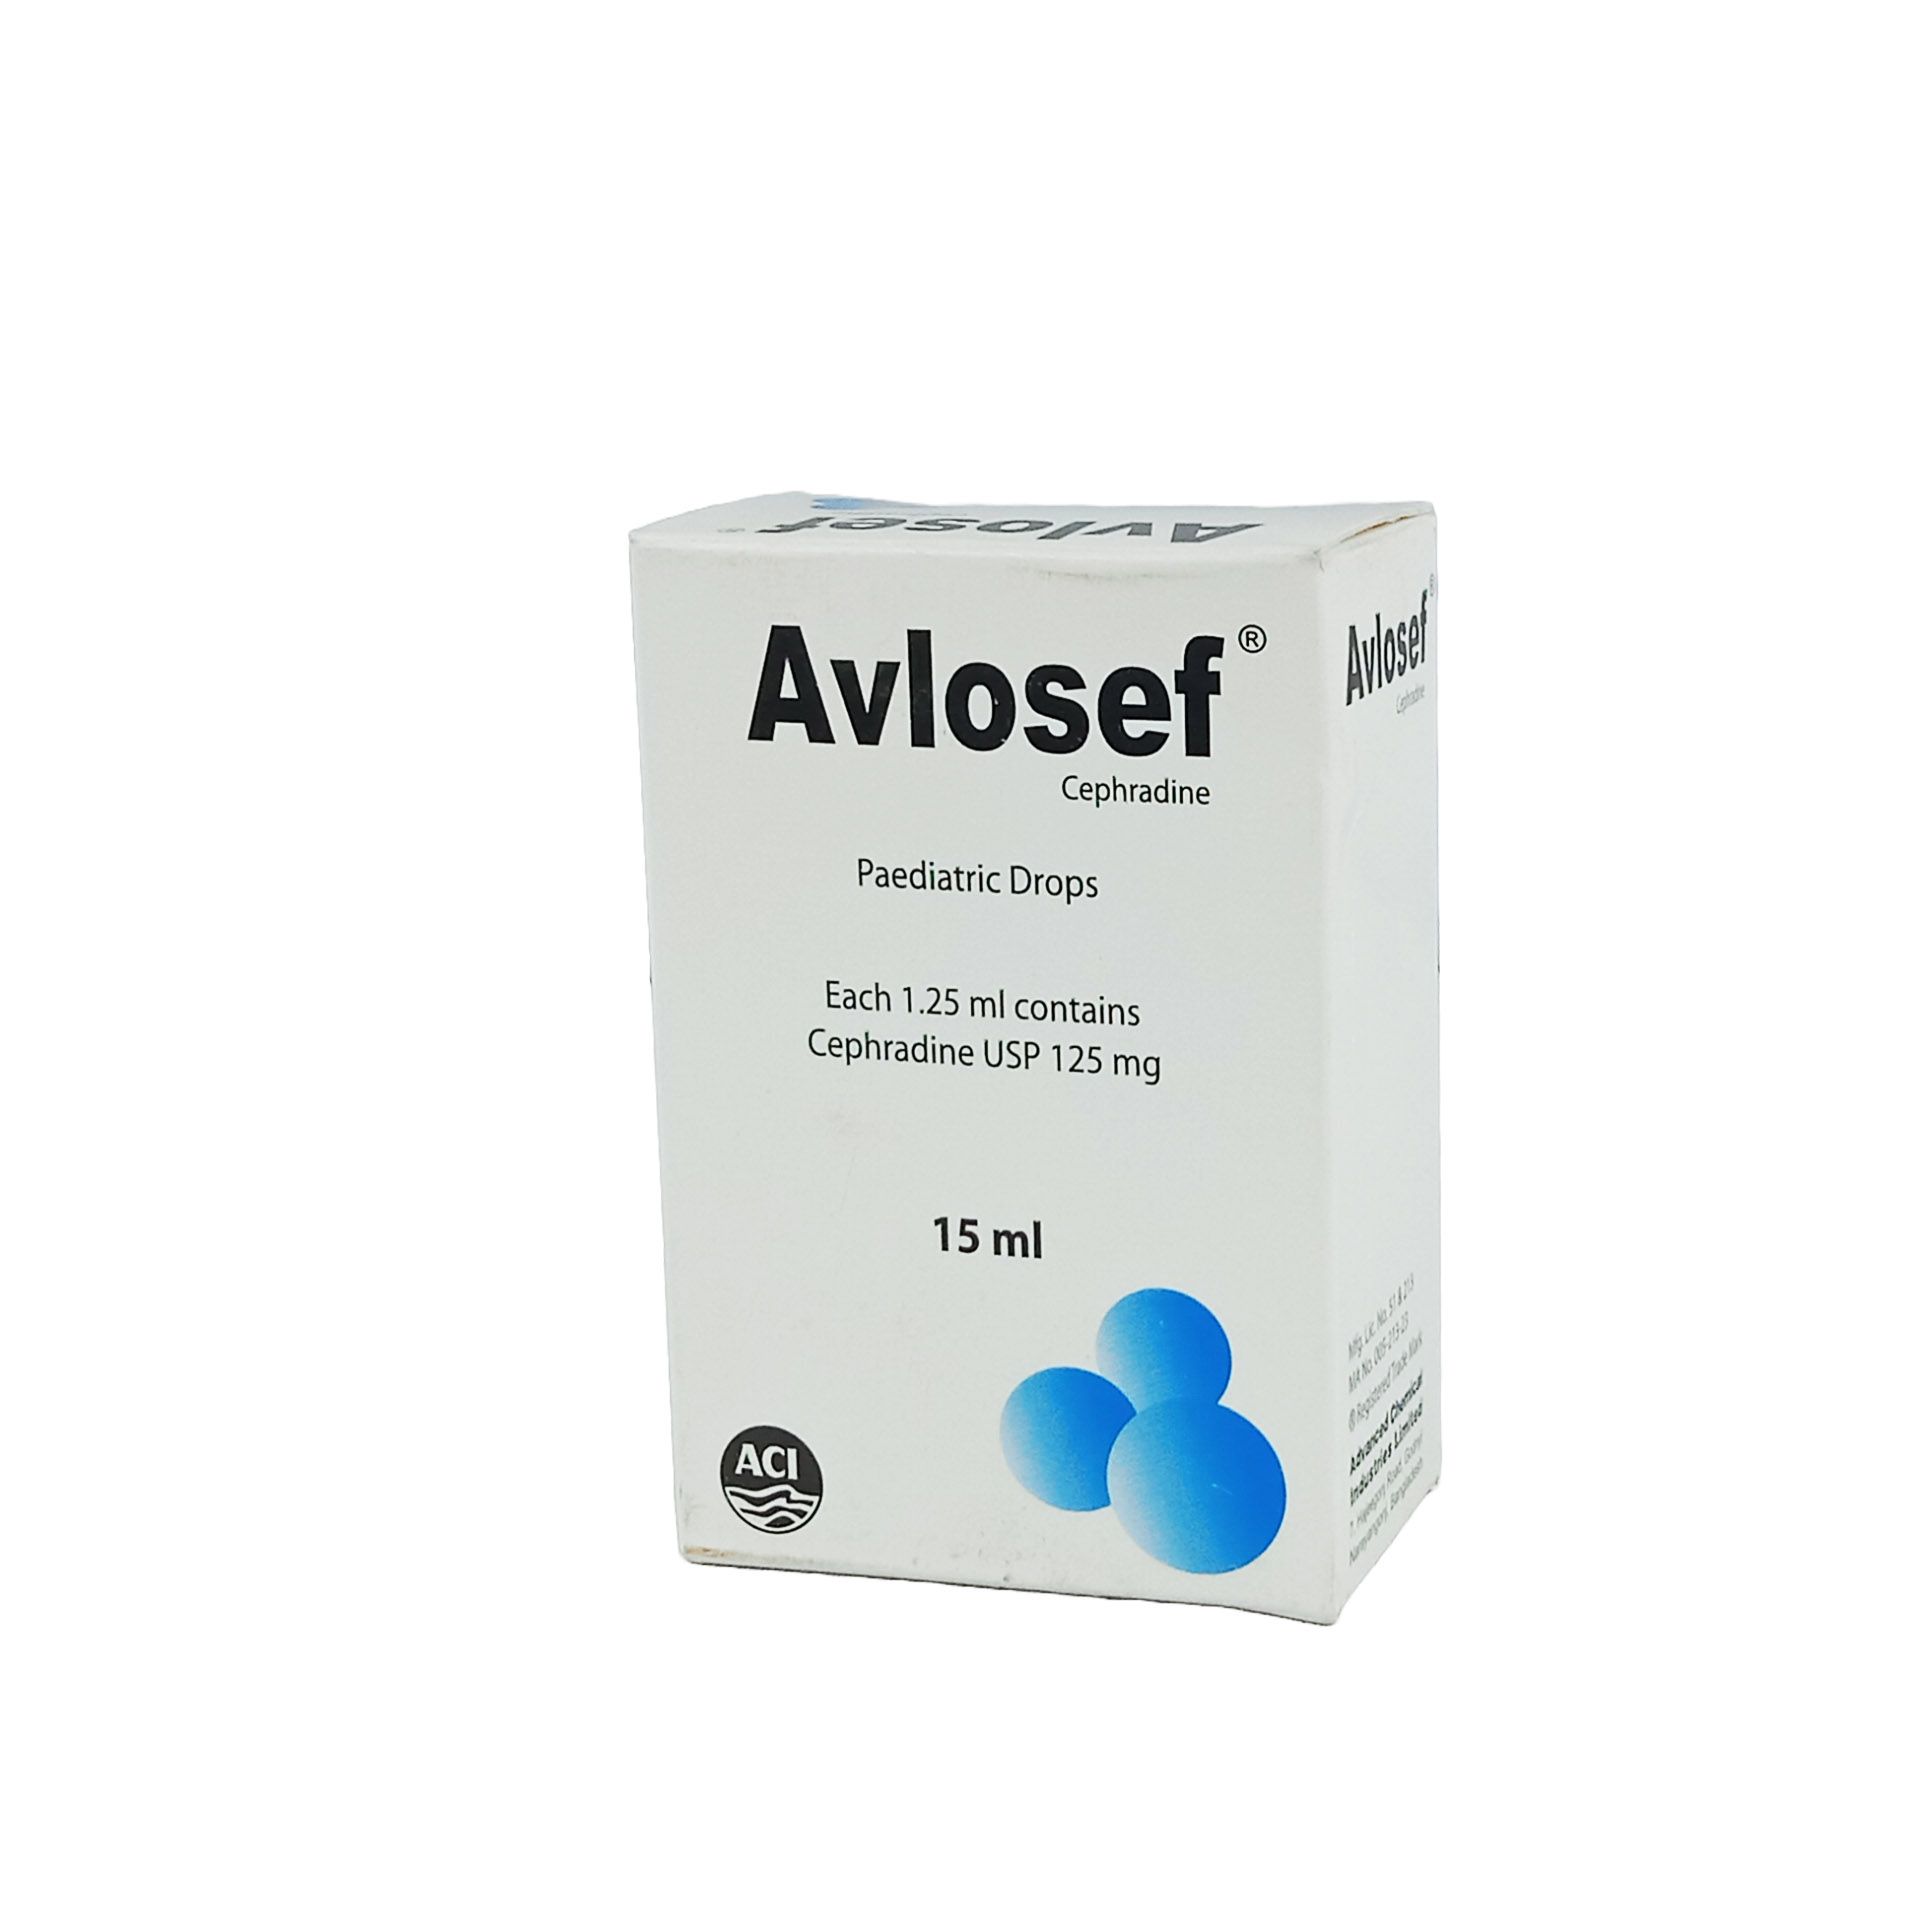 Avlosef PD 125mg/1.25ml Pediatric Drops